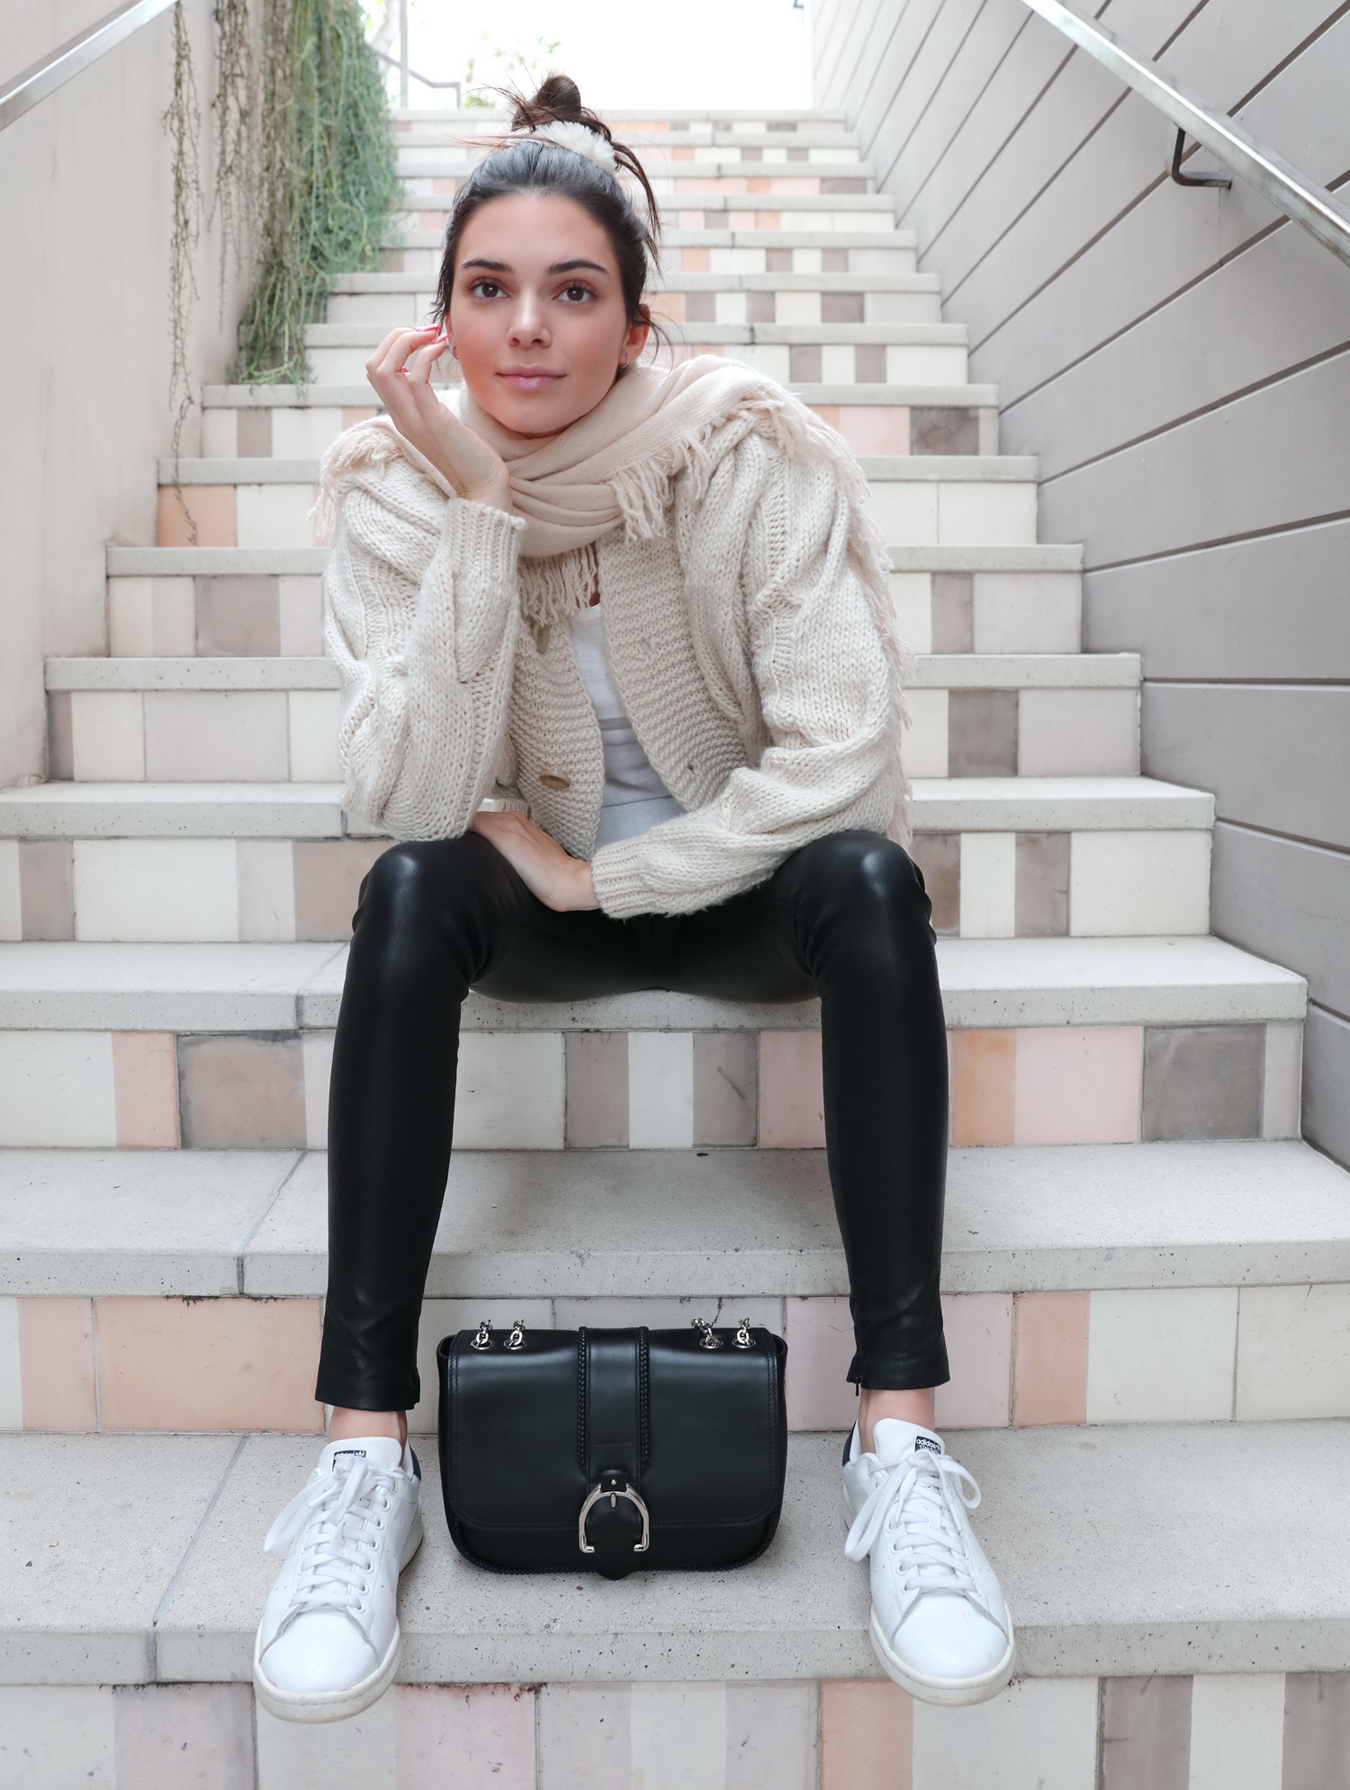 Kendall Jenner Women Model Brunette Dark Hair Women Outdoors Sitting Stairs Hand Bags Scarf Sweater  1350x1790